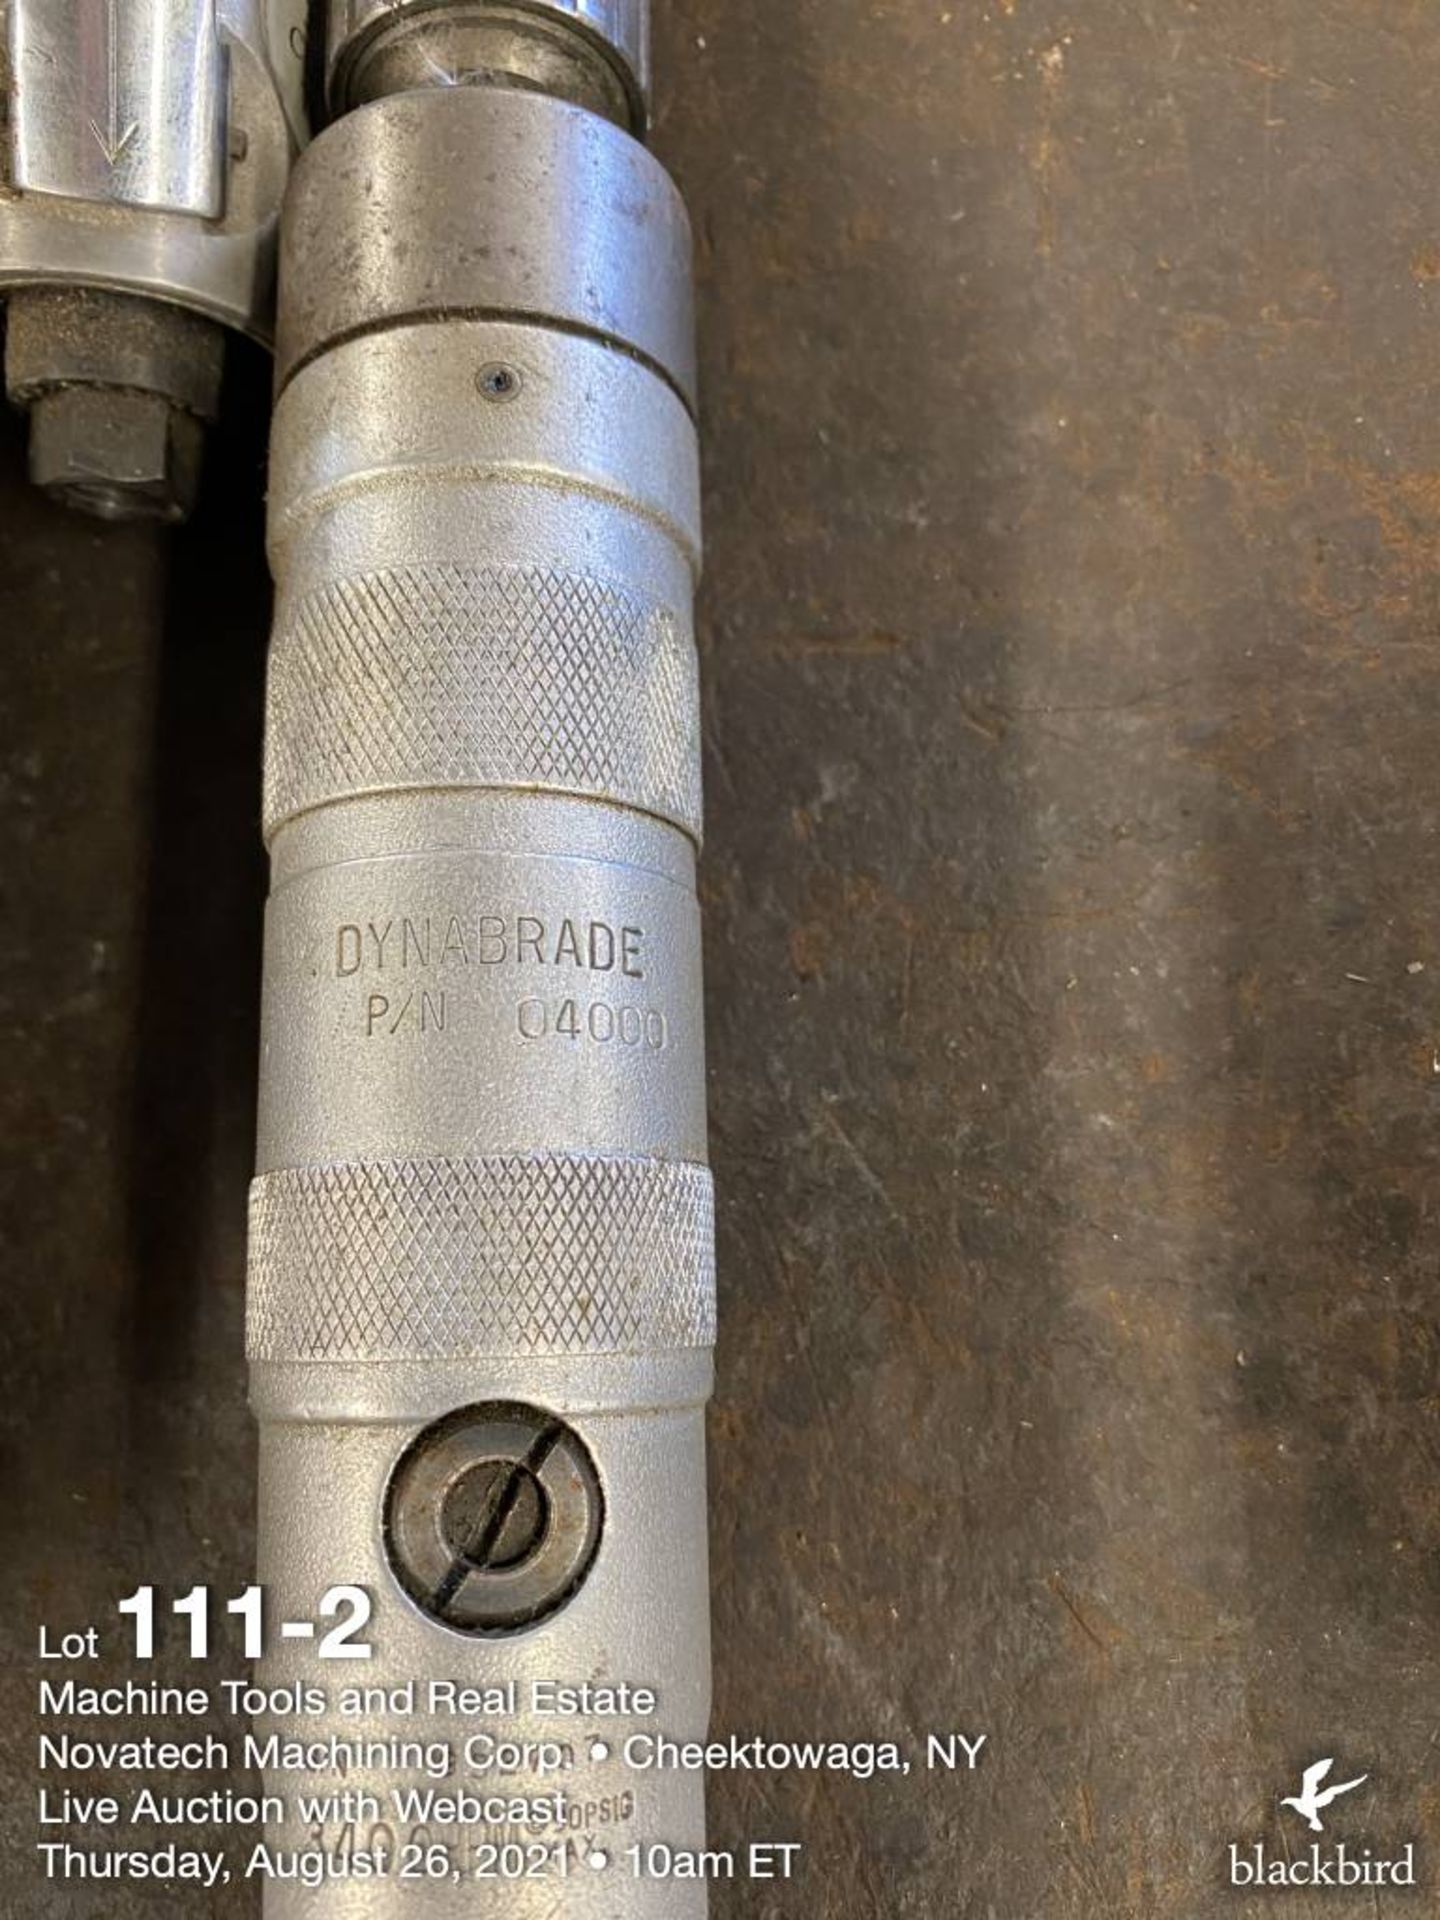 Dynabrade pneumatic drill / polisher; Black & Decker corded die grinder - Image 2 of 2